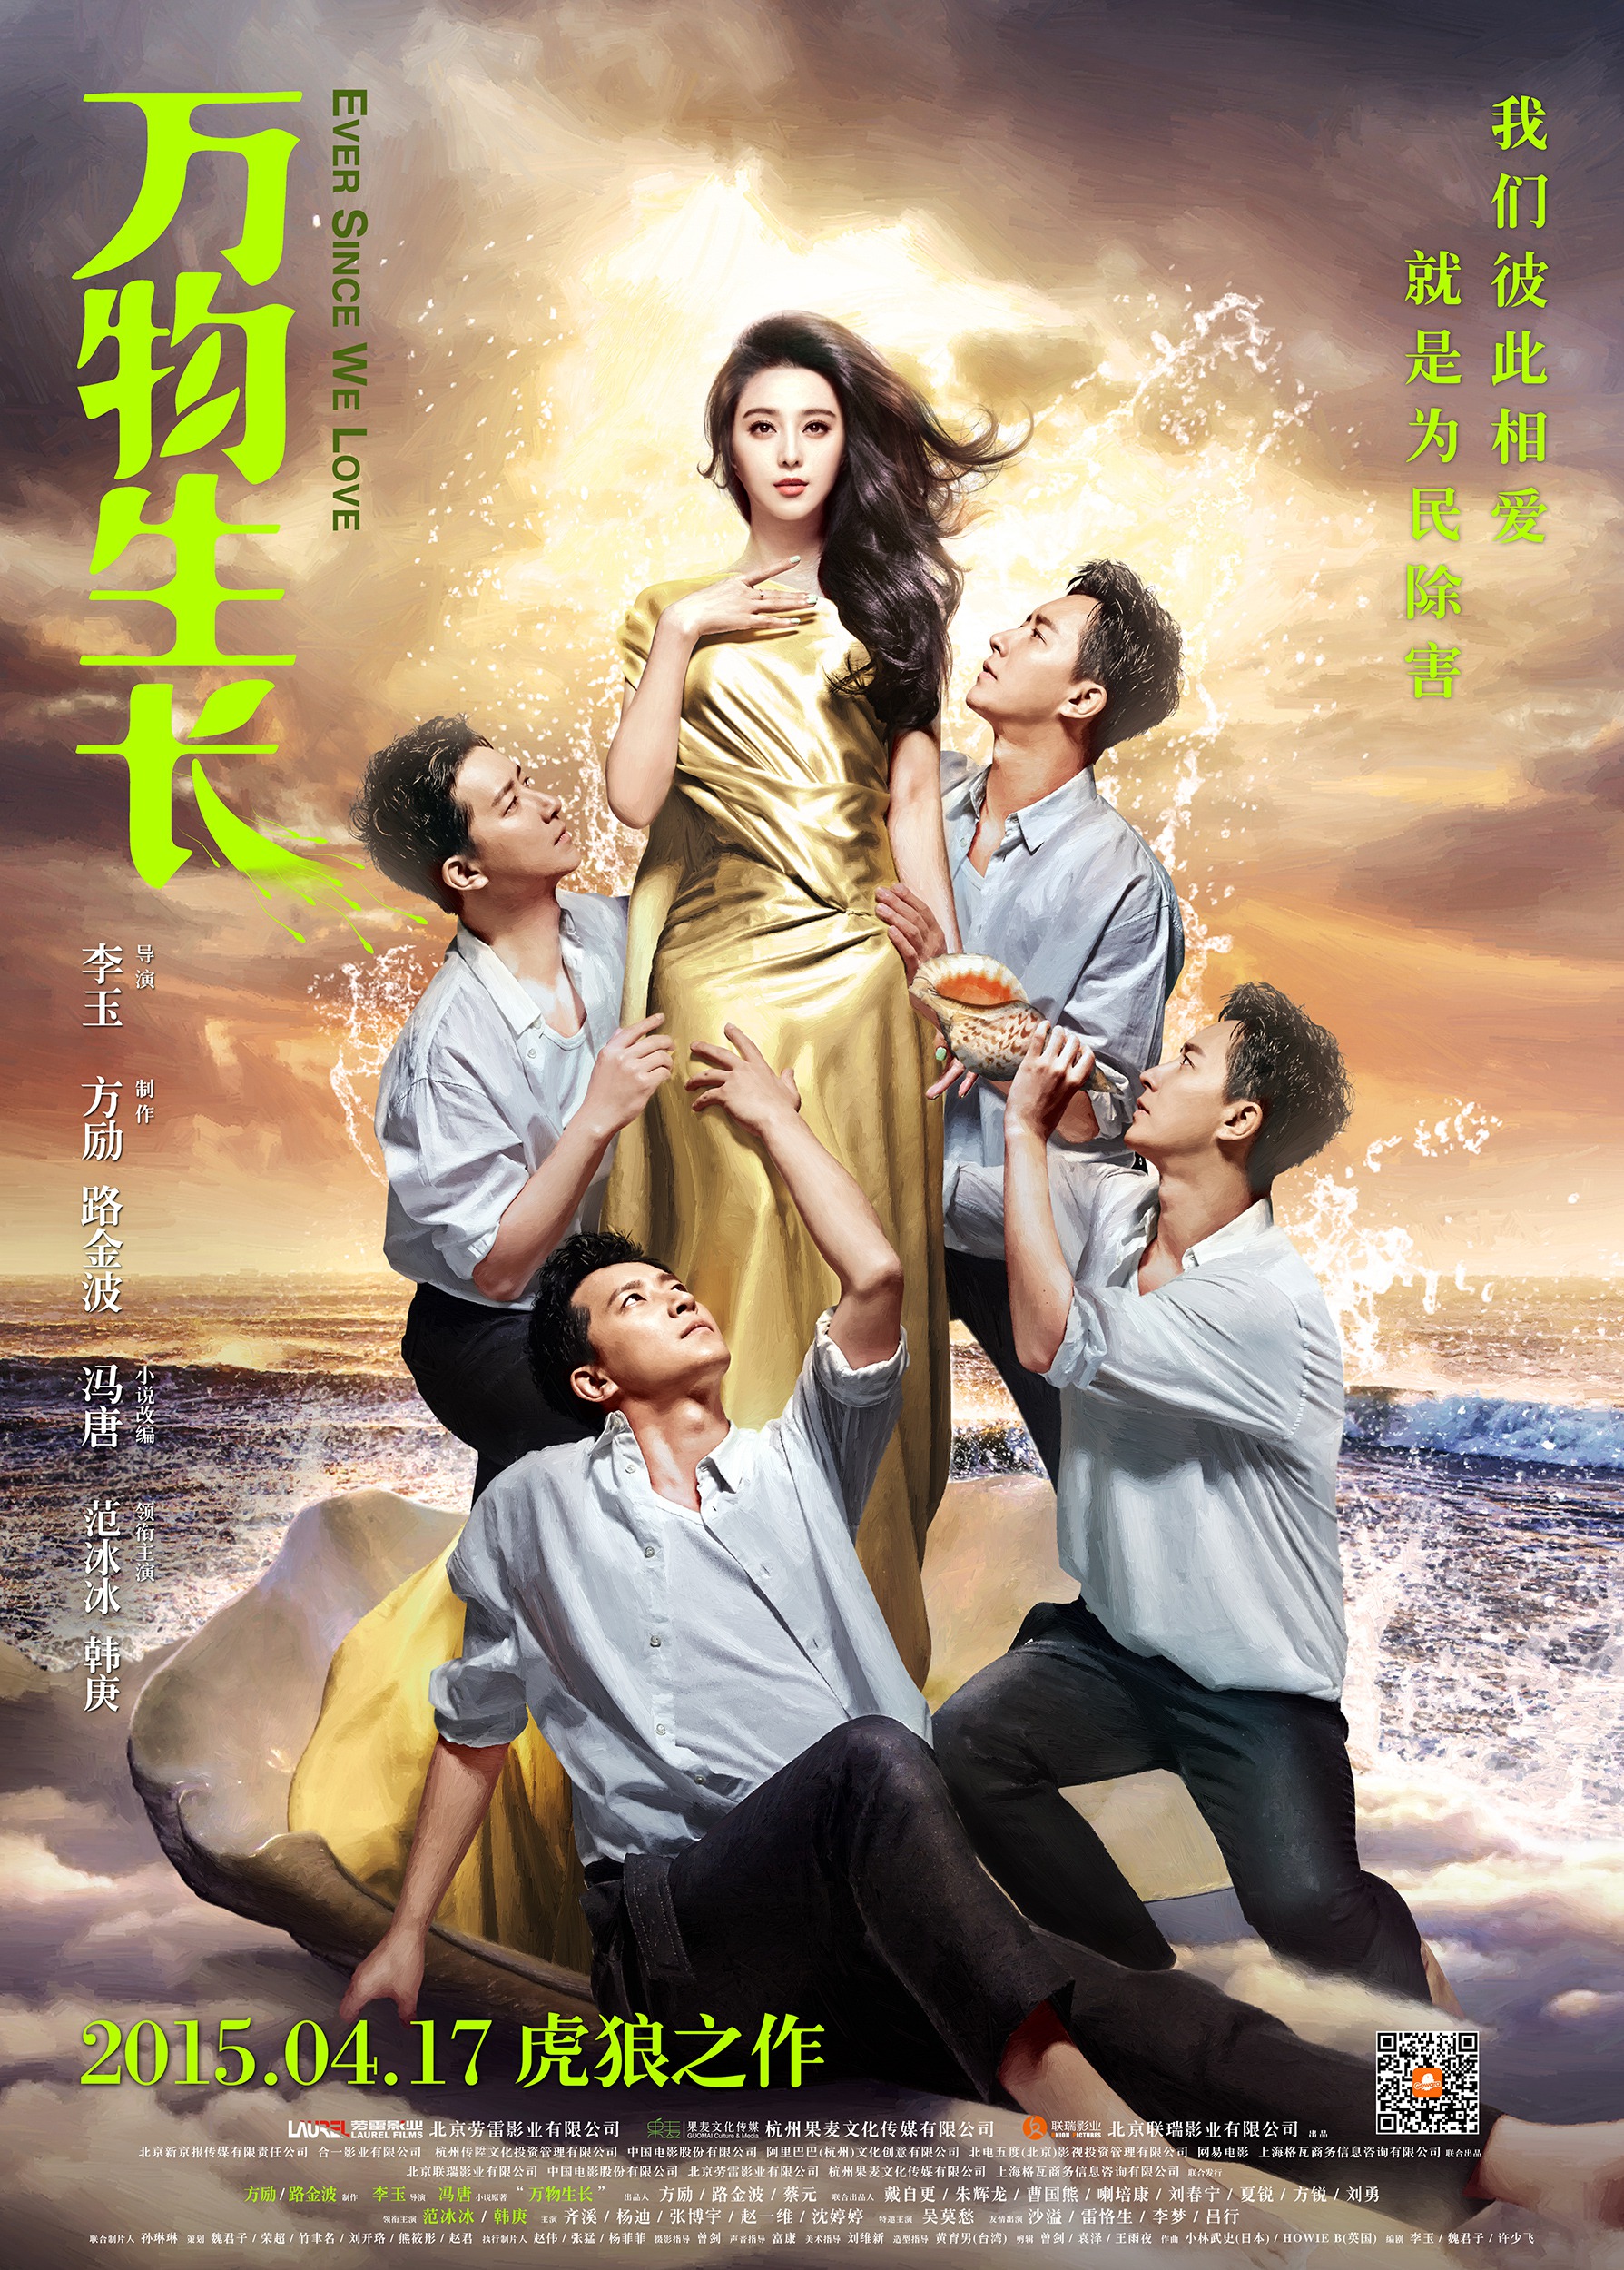 Mega Sized Movie Poster Image for Wan Wu Sheng Zhang (#2 of 4)